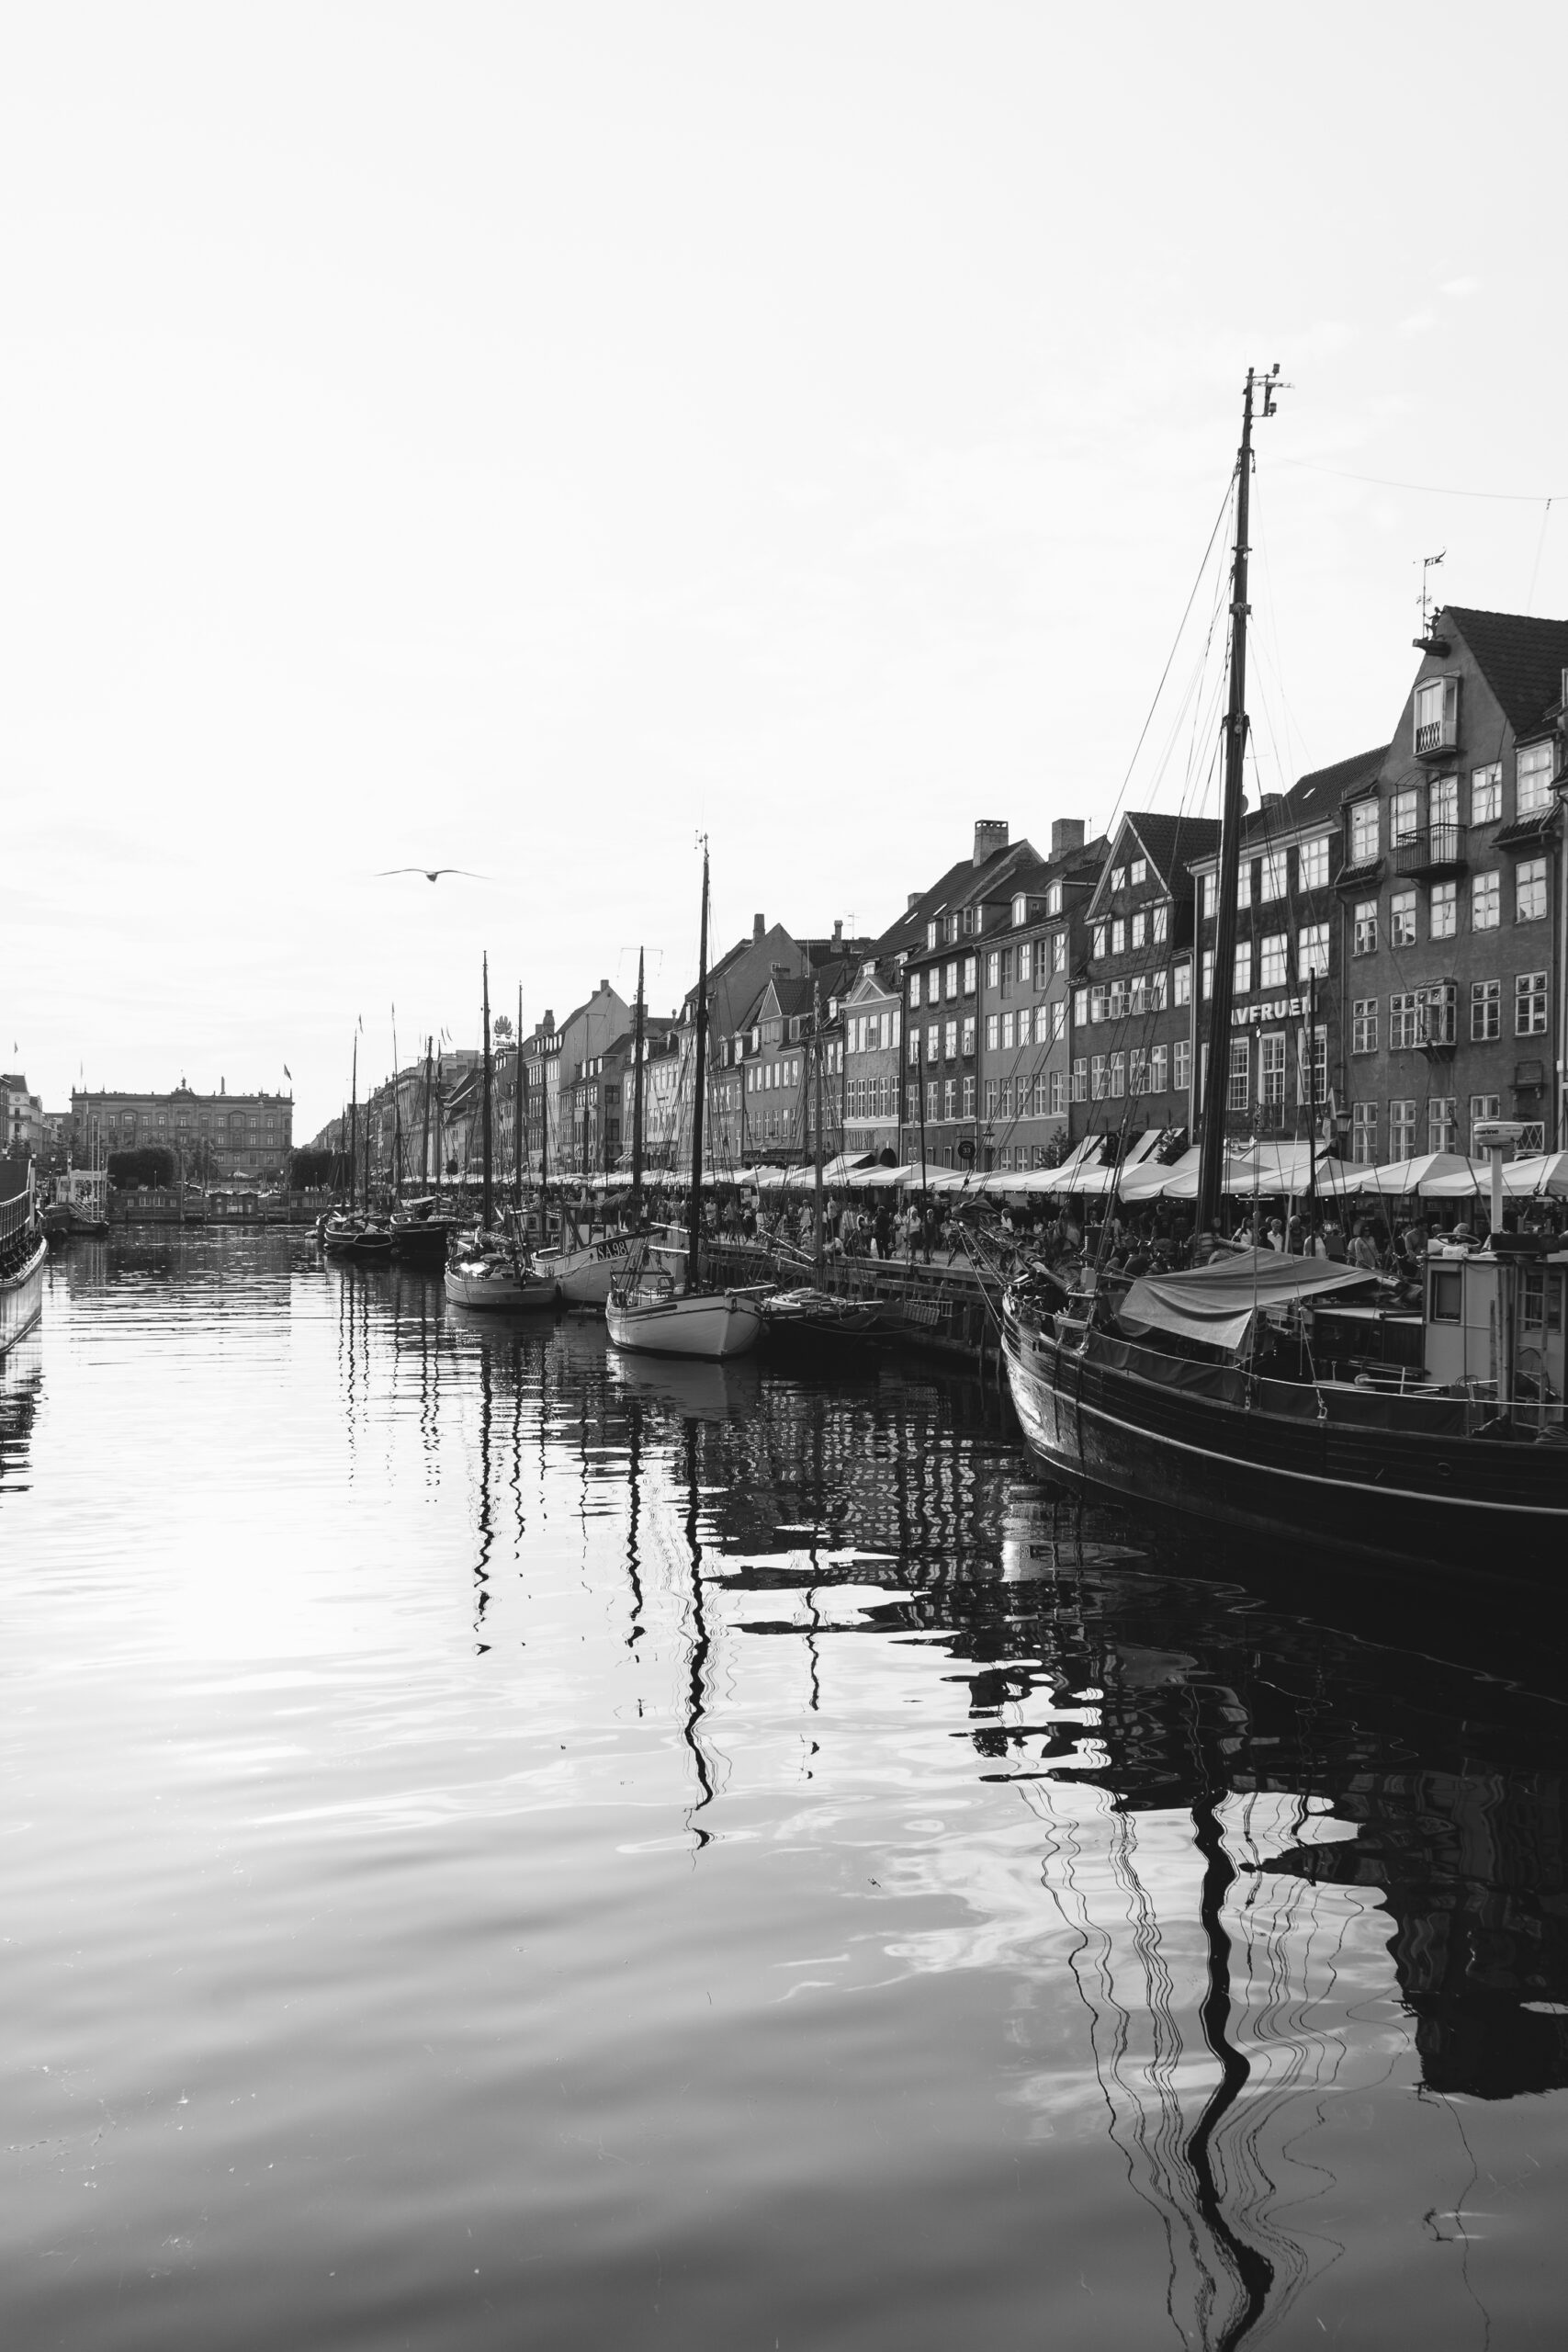 My solo trip to Copenhagen